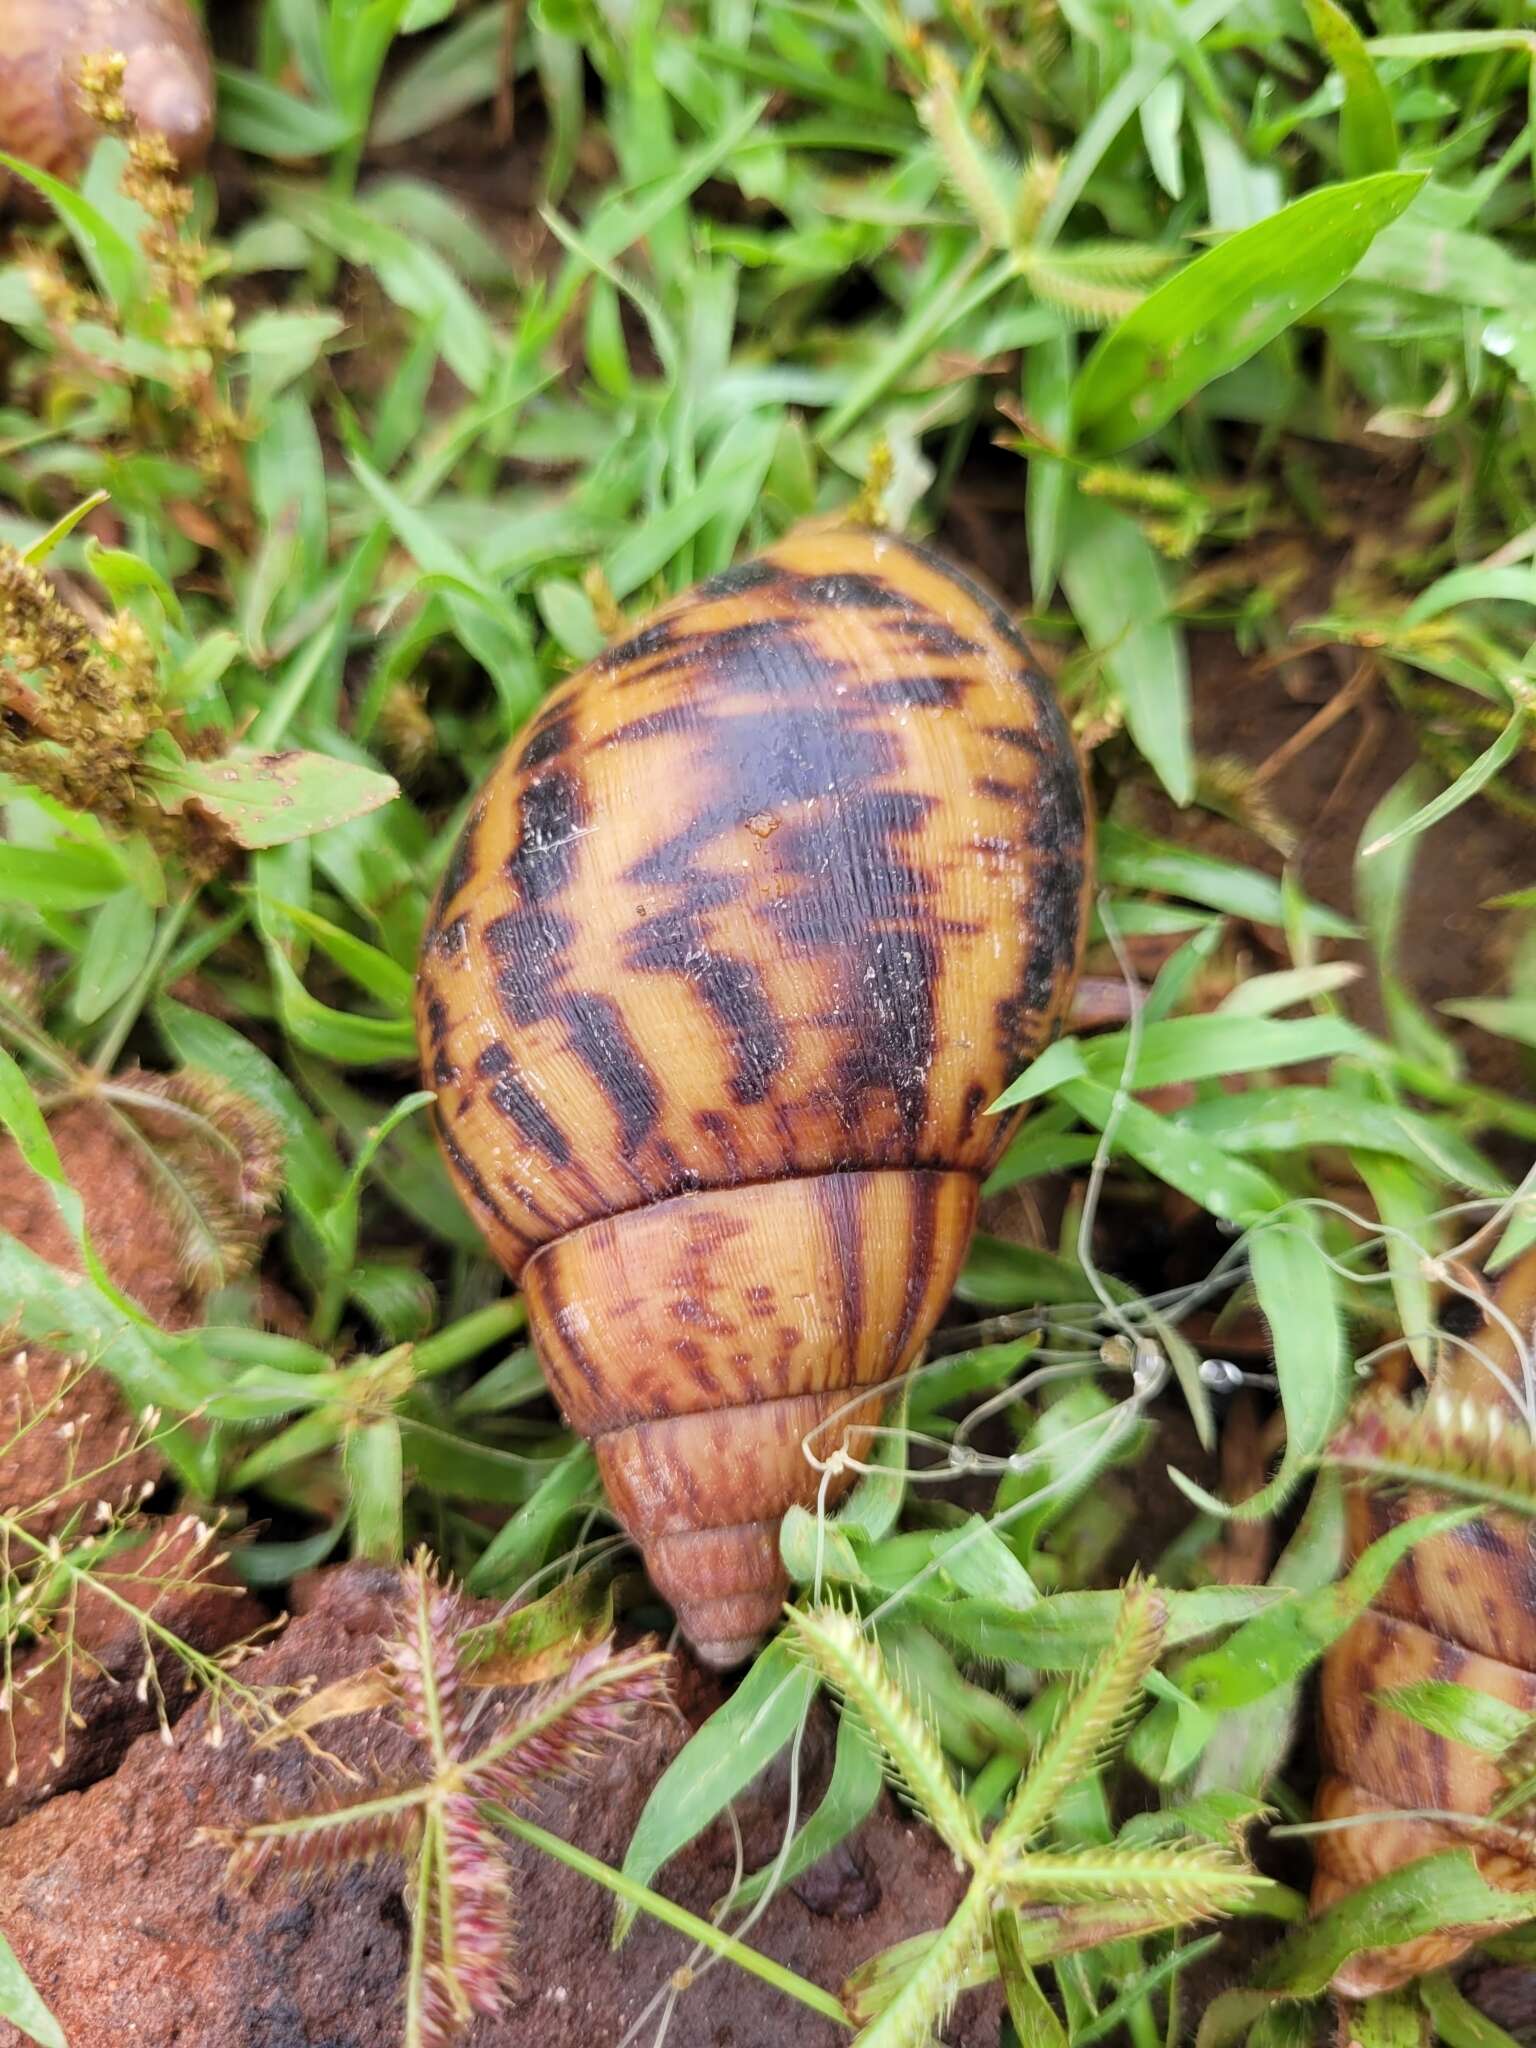 Image of giant Ghana tiger snail